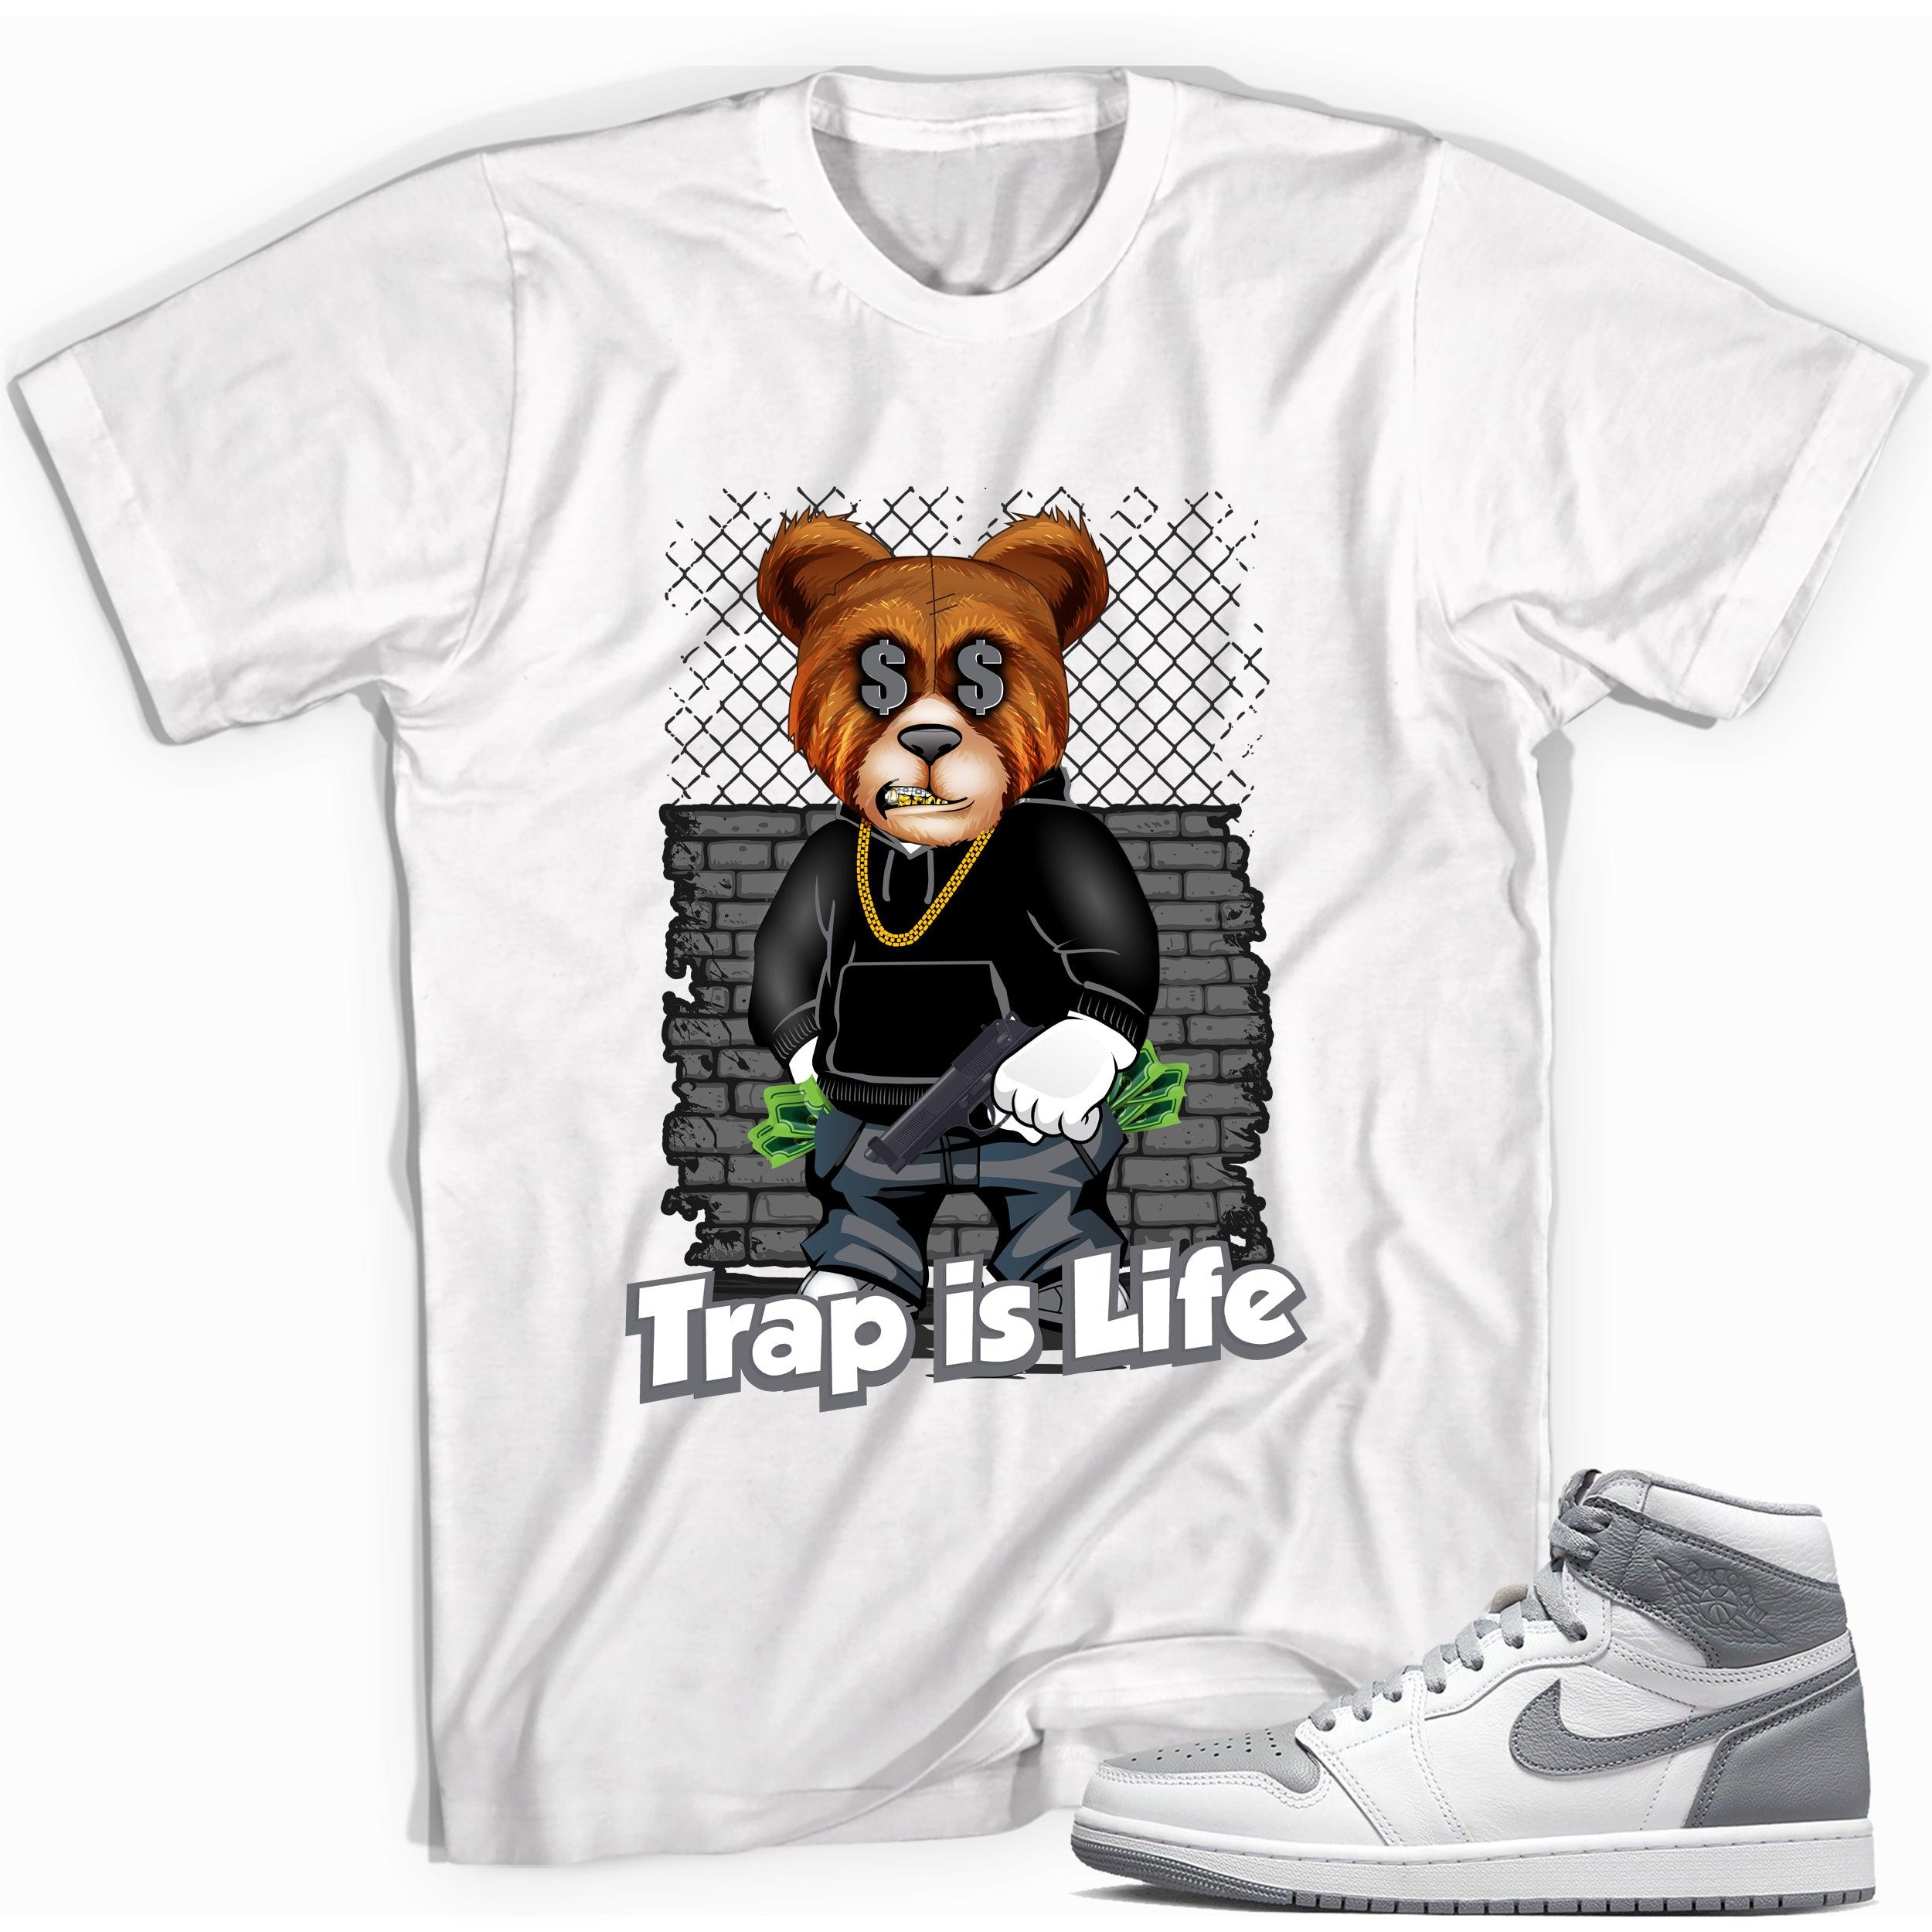 Trap is Life Shirt for Jordan 1s photo